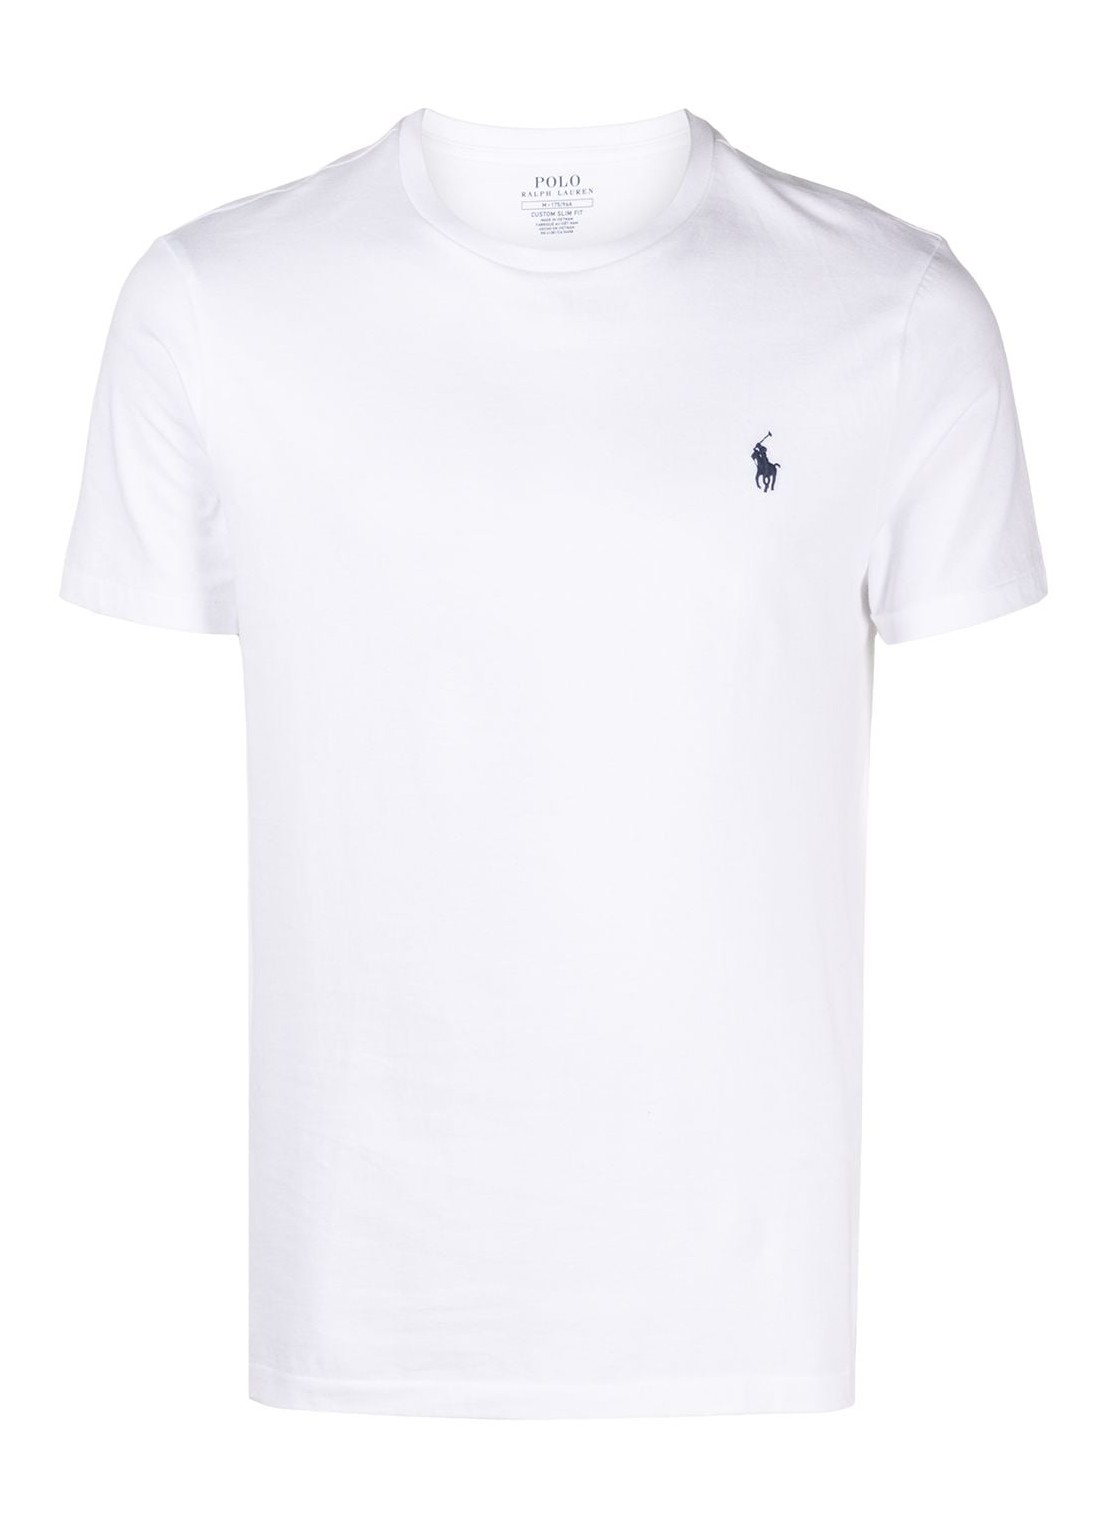 Camiseta polo ralph lauren t-shirt man jersey ssl tshirt 710680785003 white talla blanco
 